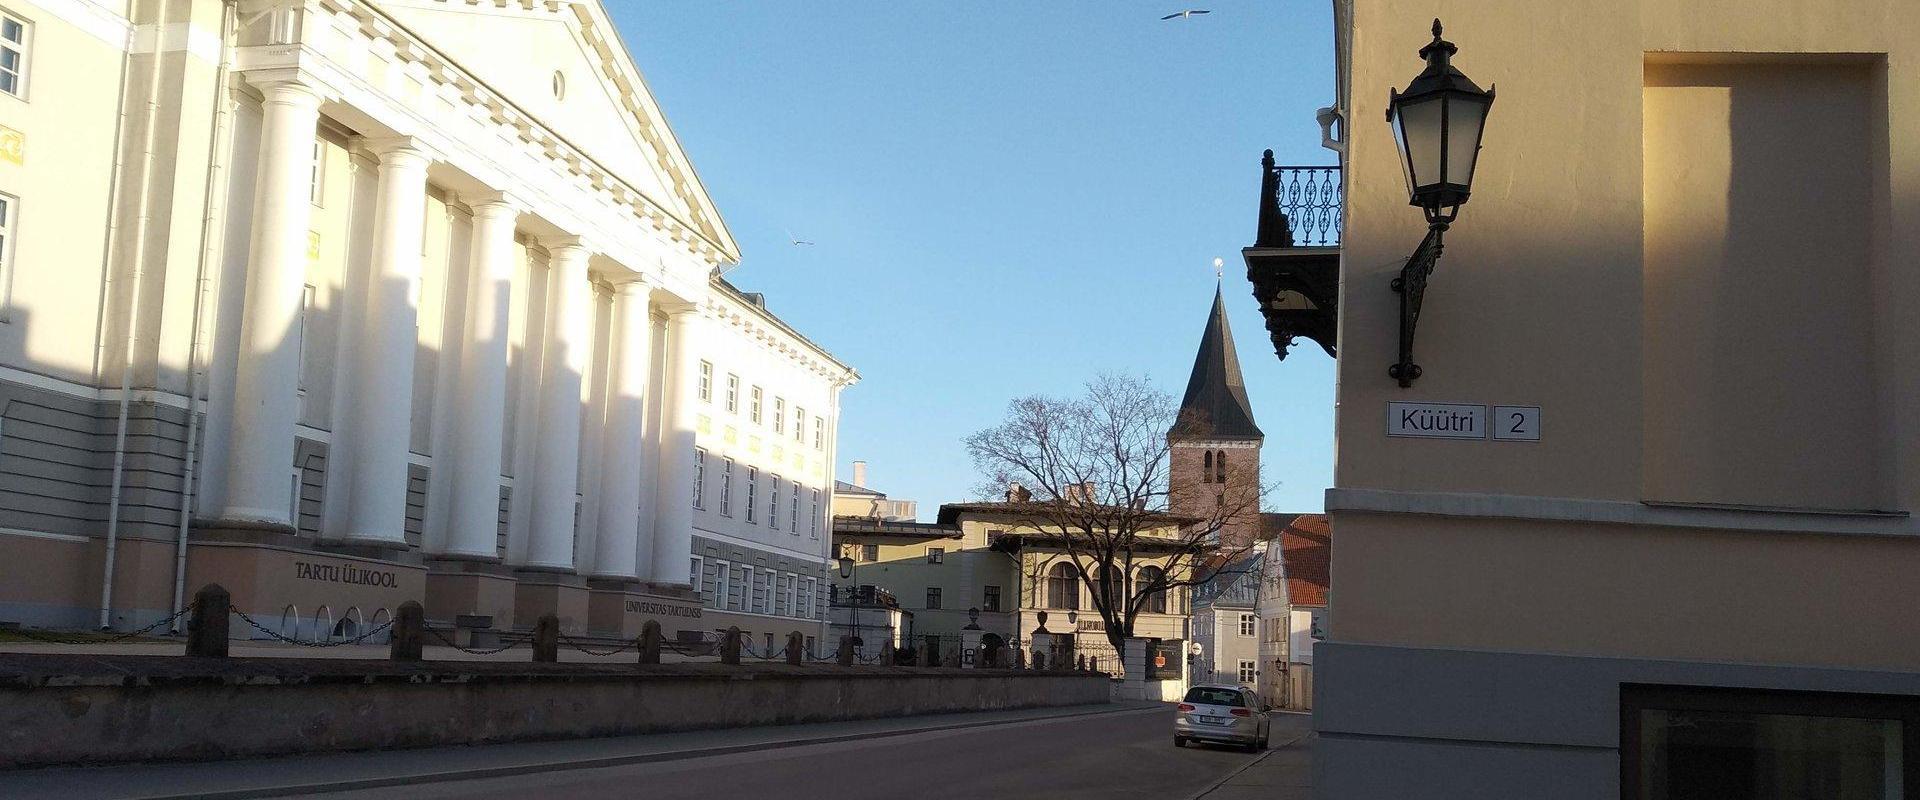 The main building of the University of Tartu